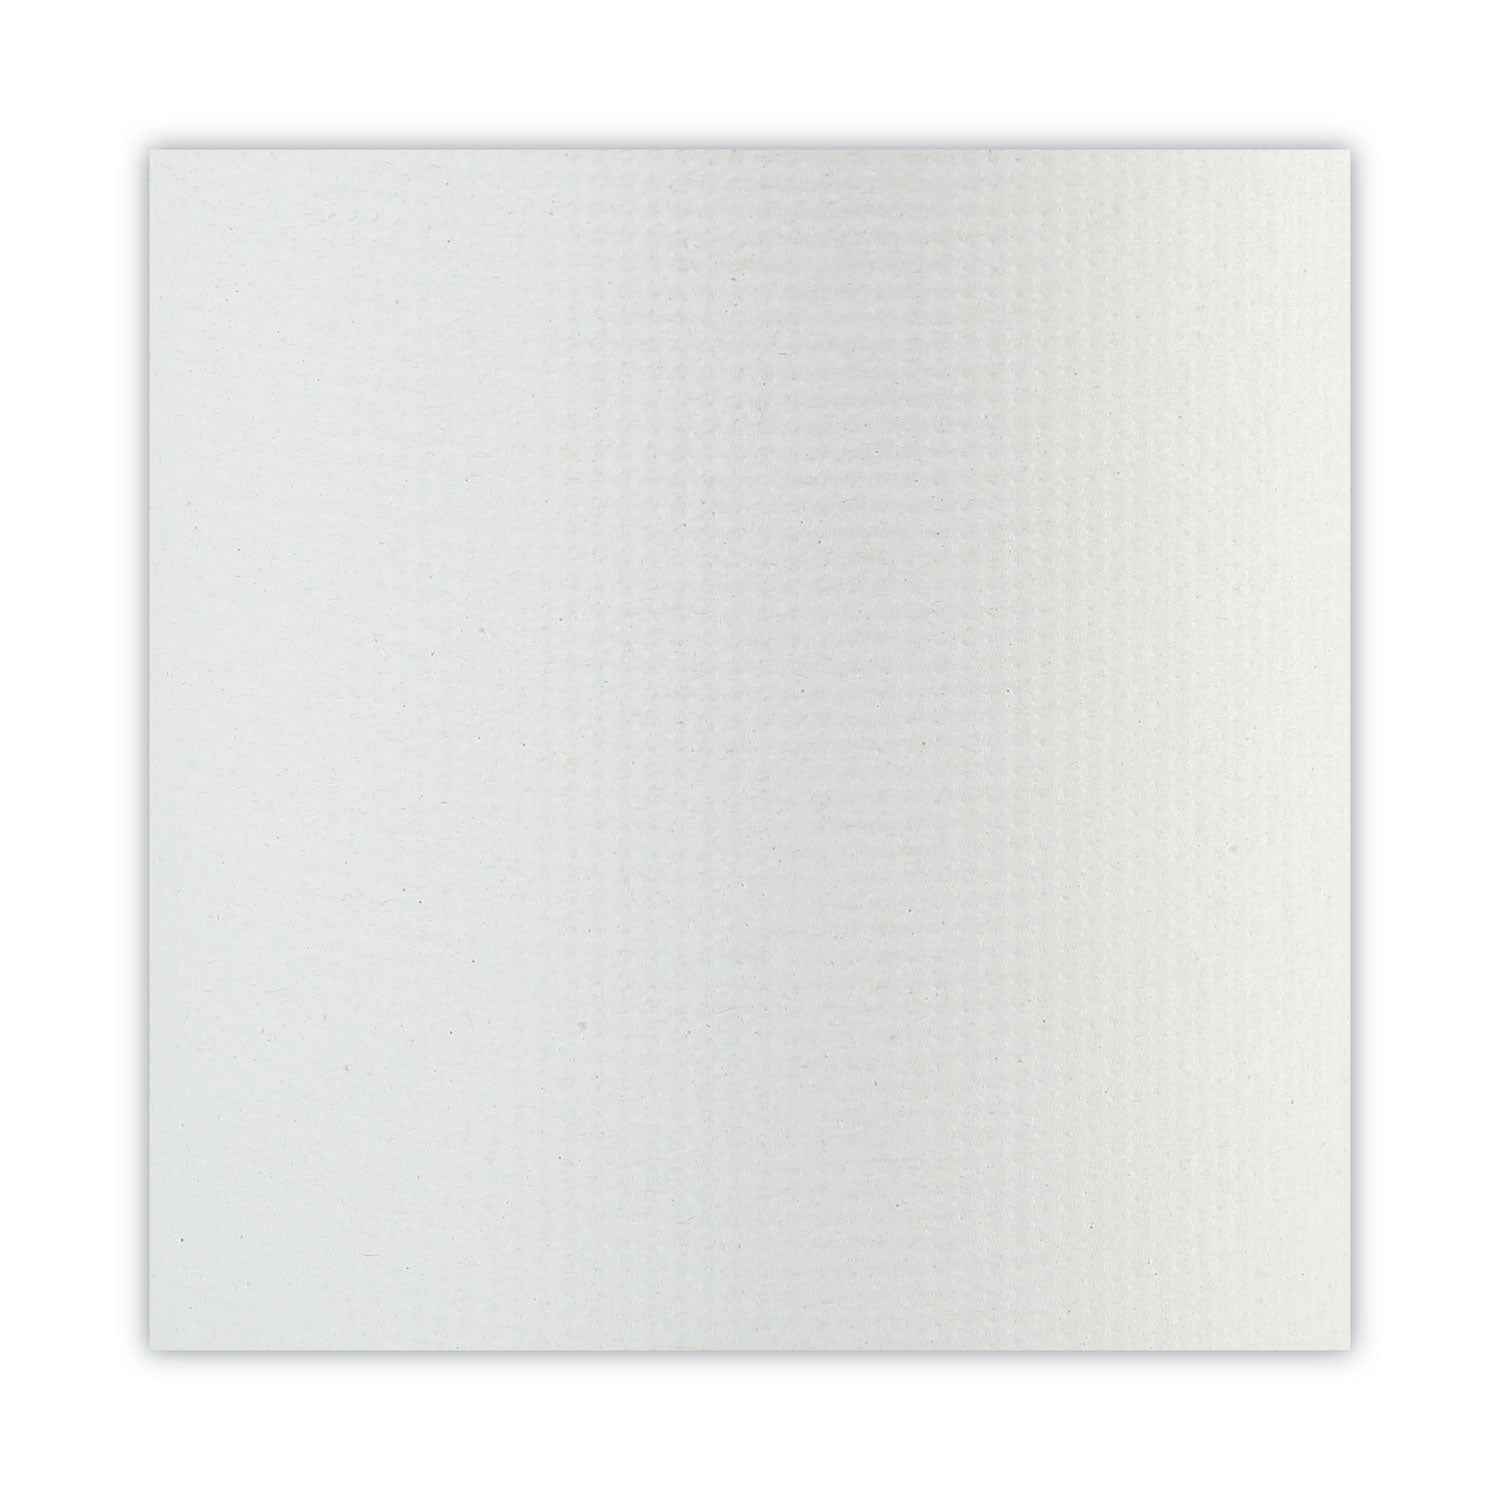 hardwound-paper-towels-1-ply-8-x-800-ft-white-6-rolls-carton_bwk6254b - 5